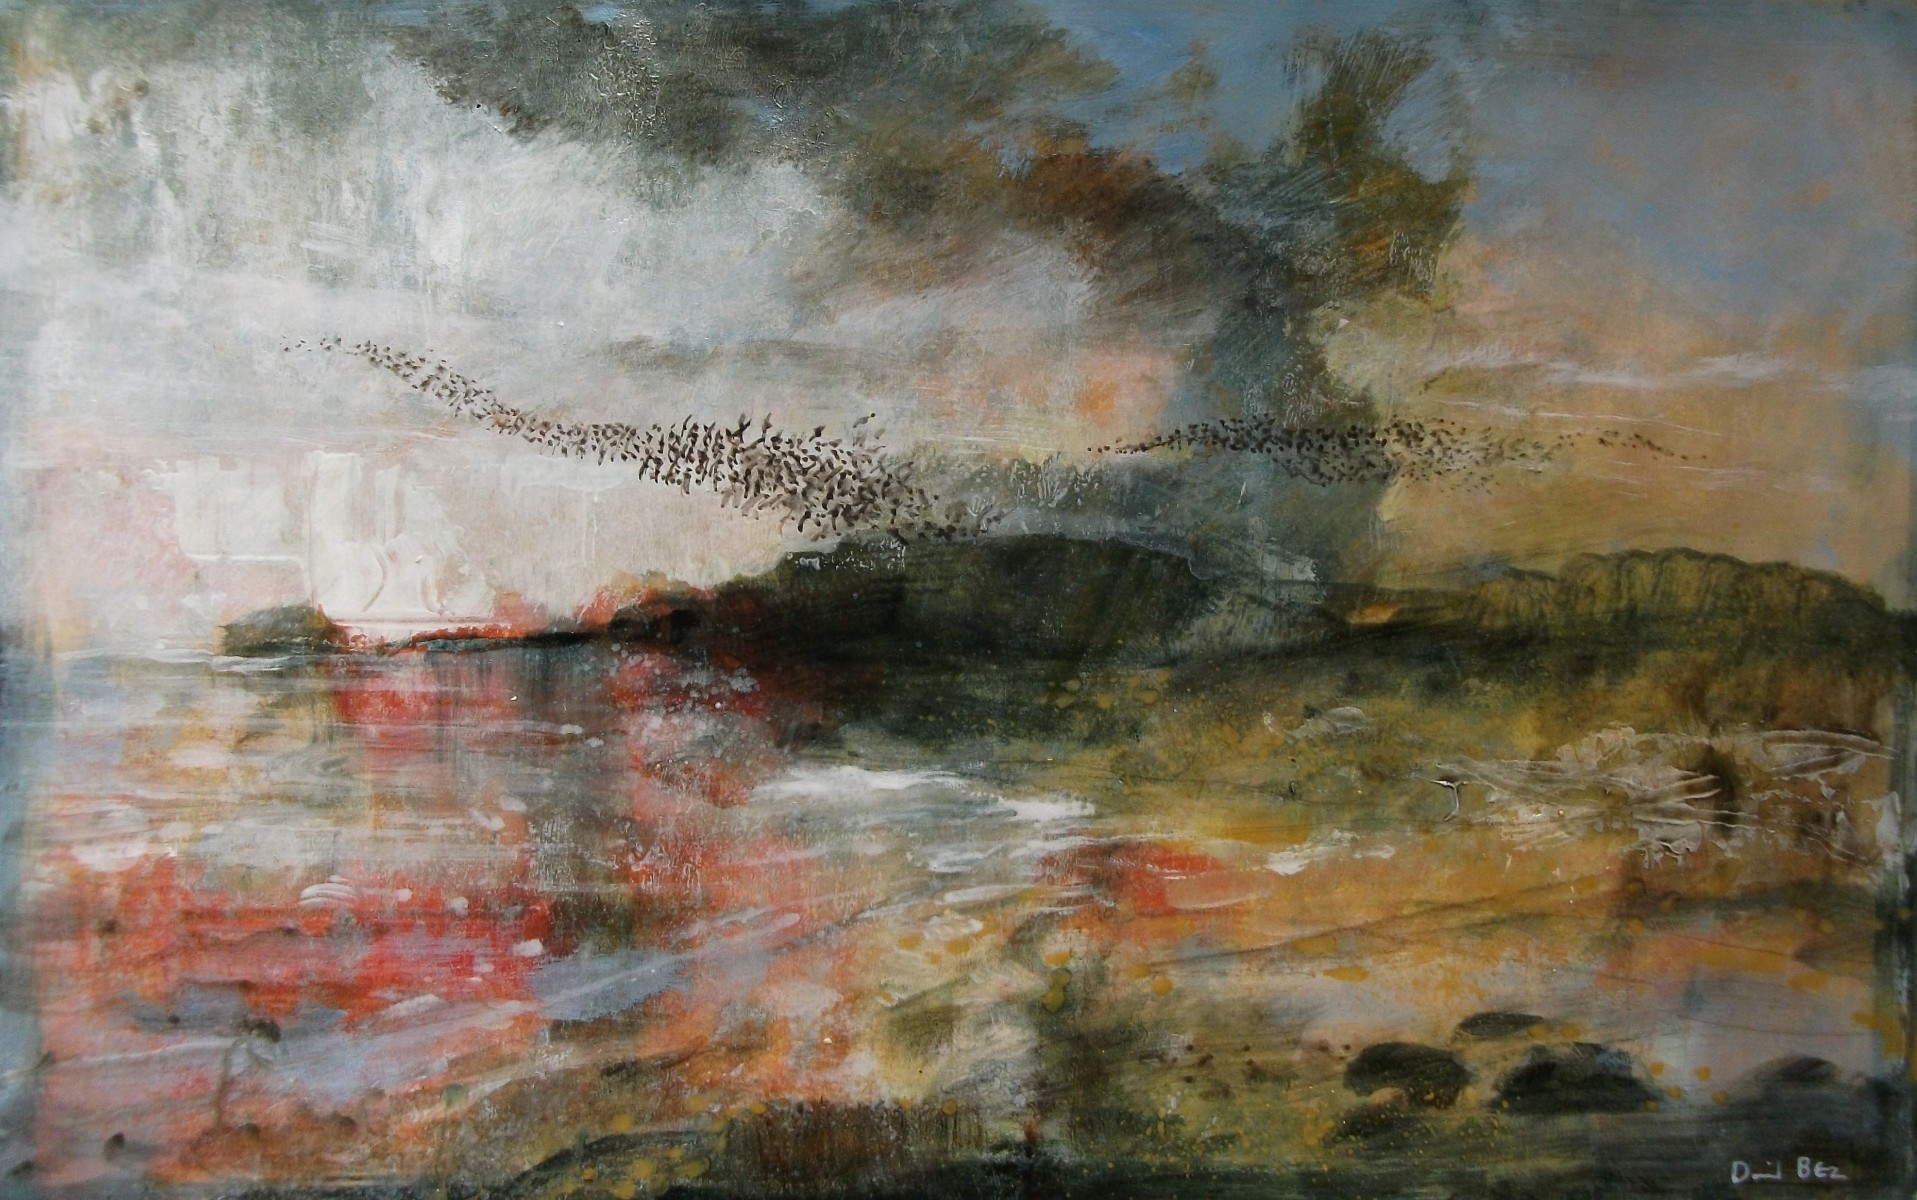 Starling Surge by David Bez